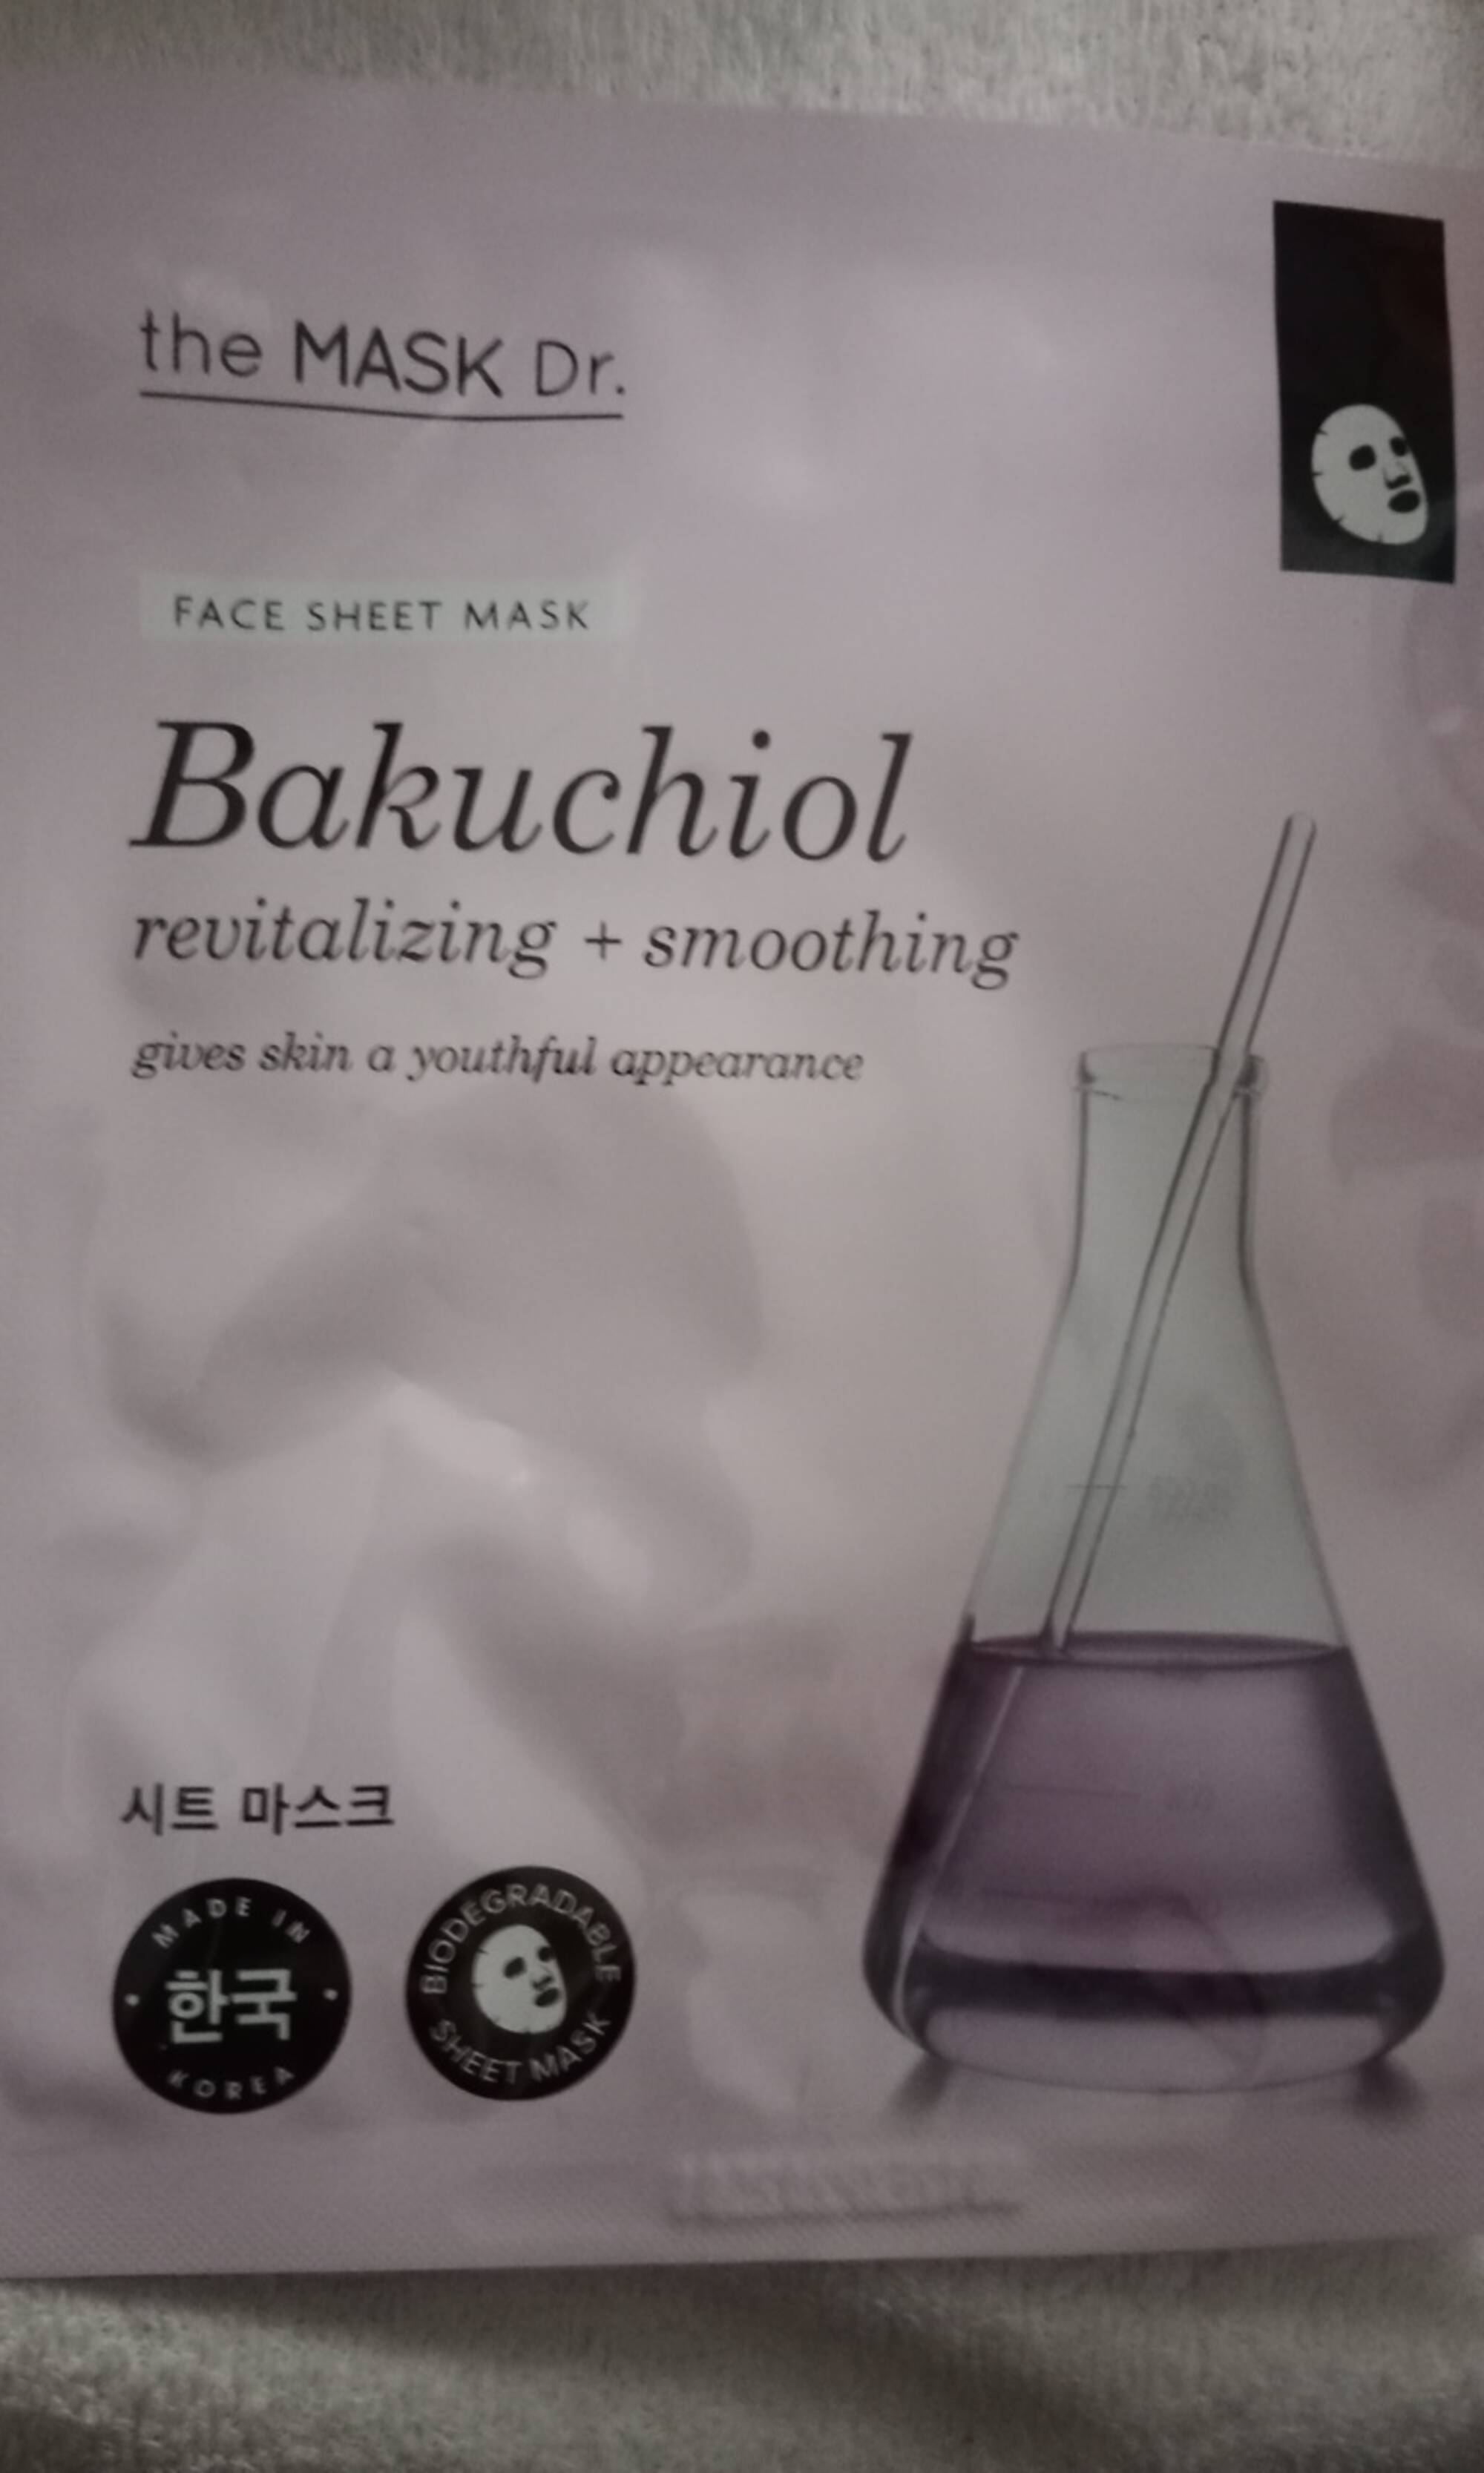 THE MASK DR. - Bakuchiol - Face sheet mask 